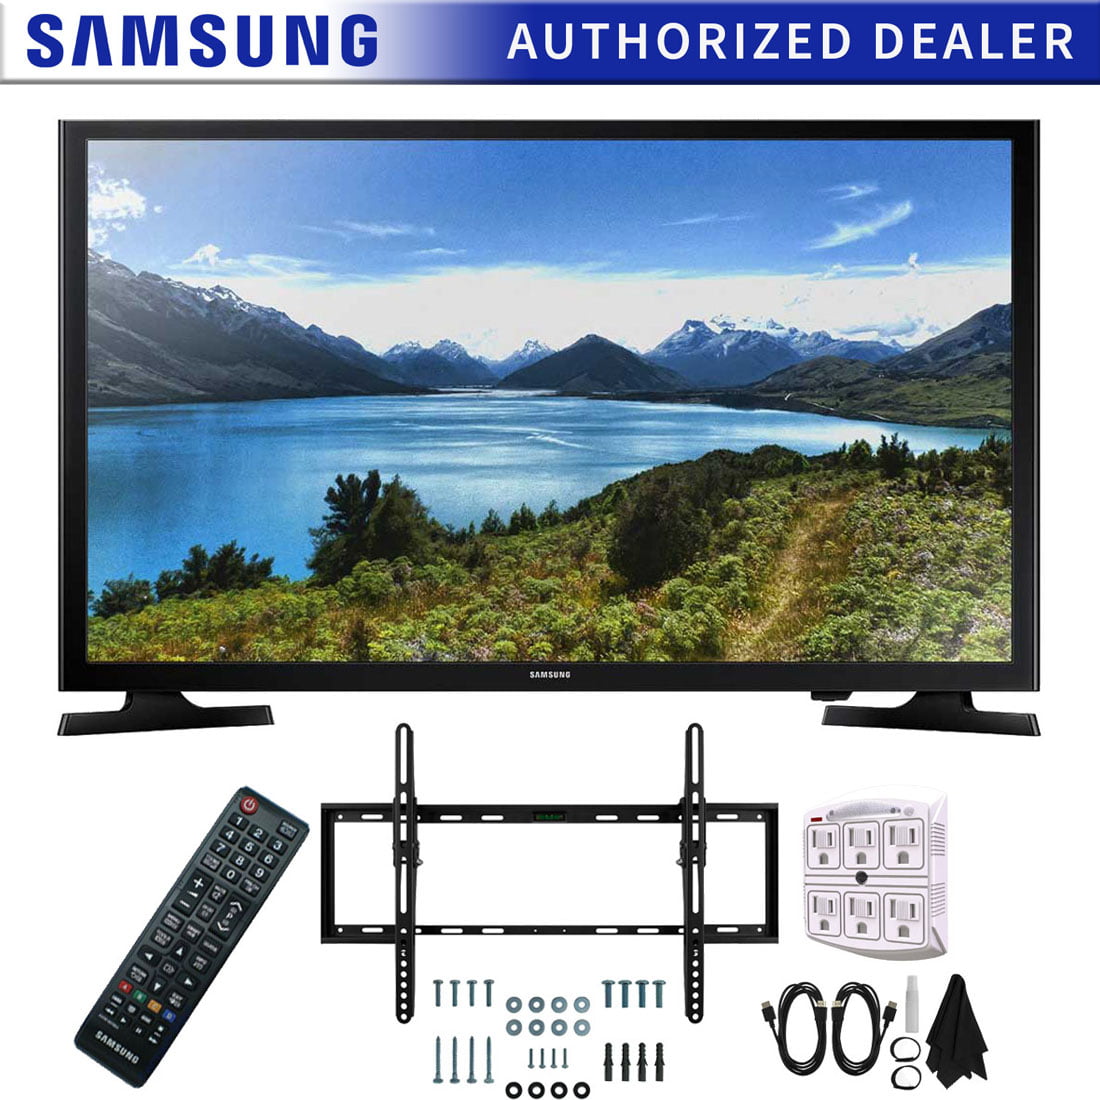 Samsung Electronics UN32J4000C 32-Inch 720p LED TV 2015 Model 